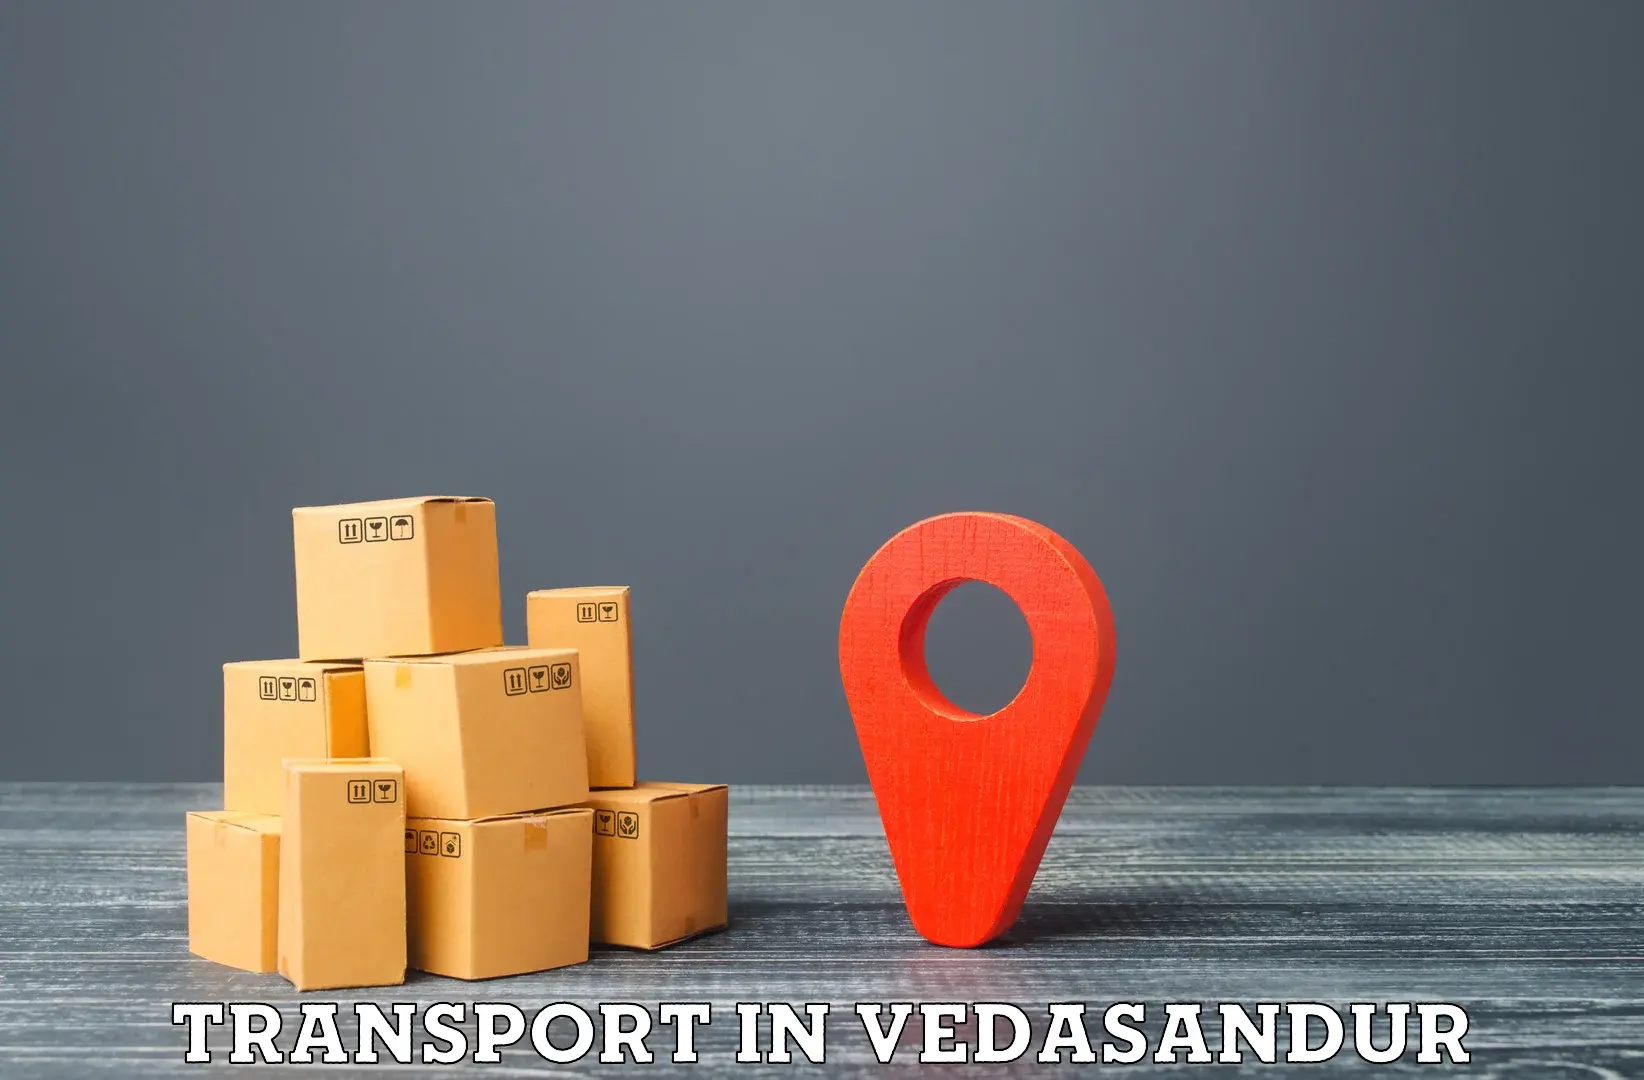 Transport in sharing in Vedasandur